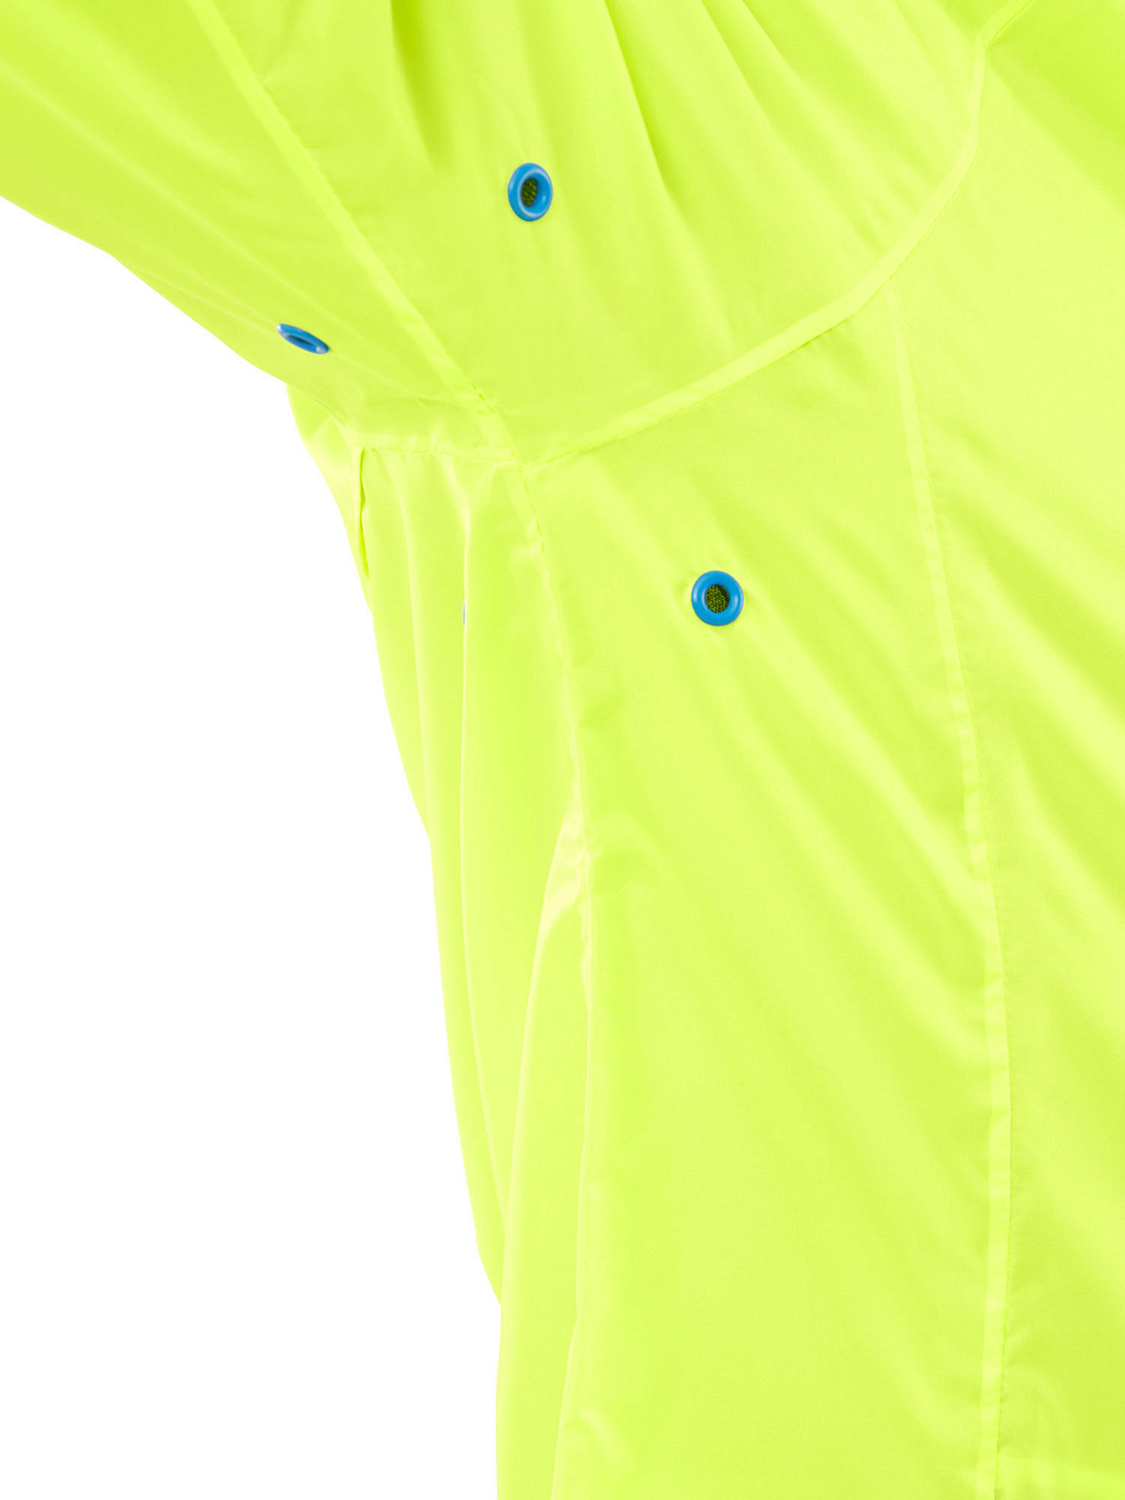 Куртка VIKING Rainier Safety Yellow